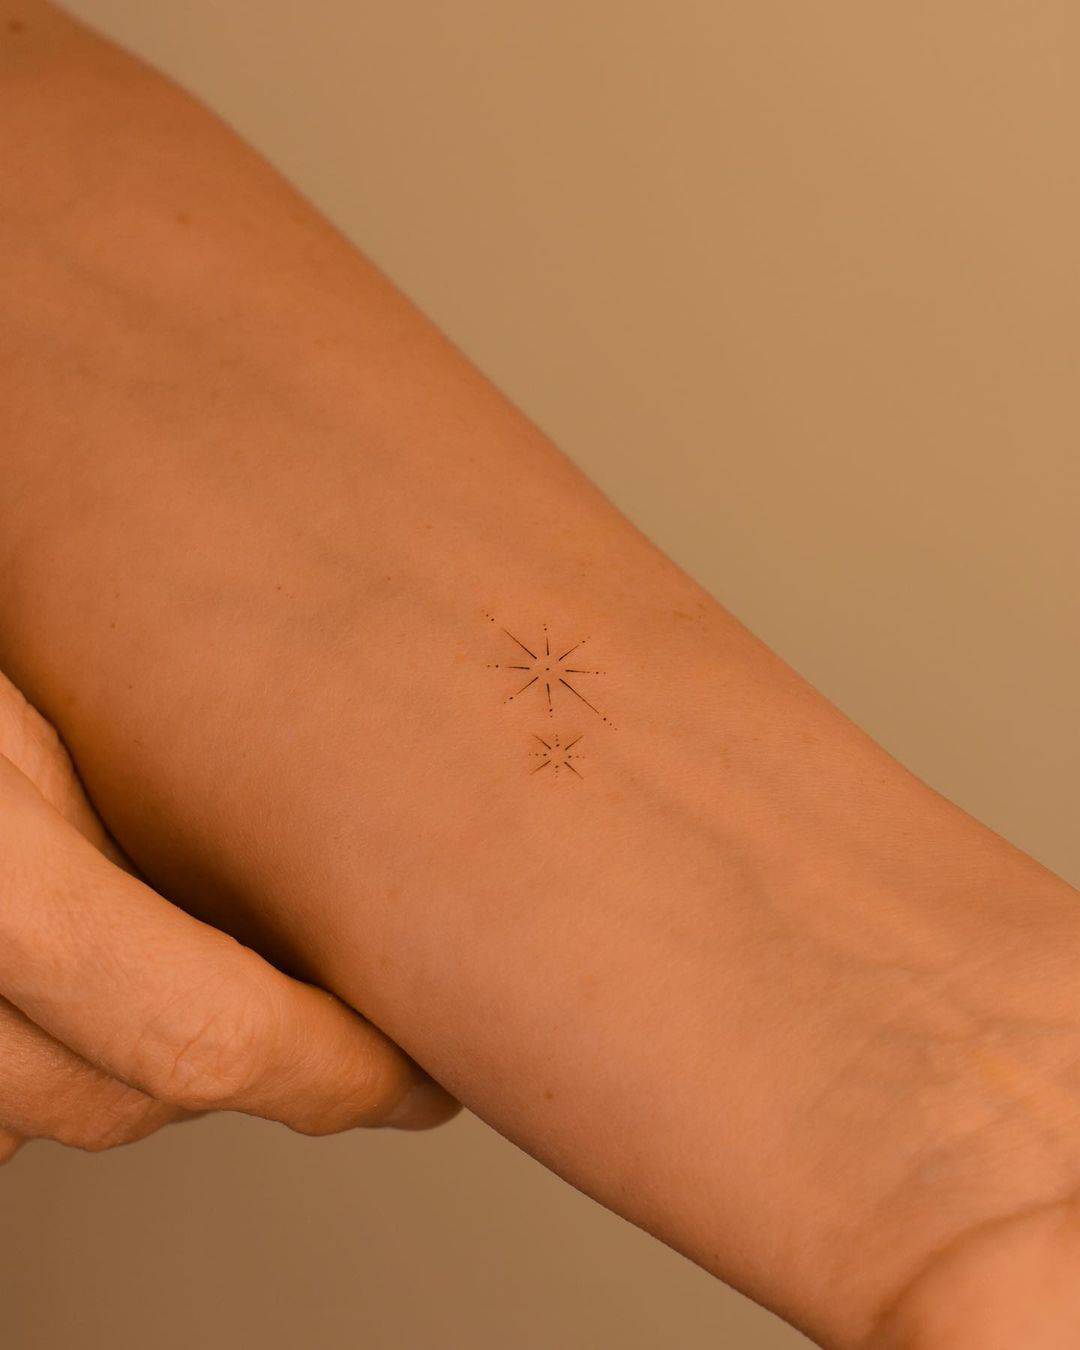 Star tattoo design by gwen.tattooing